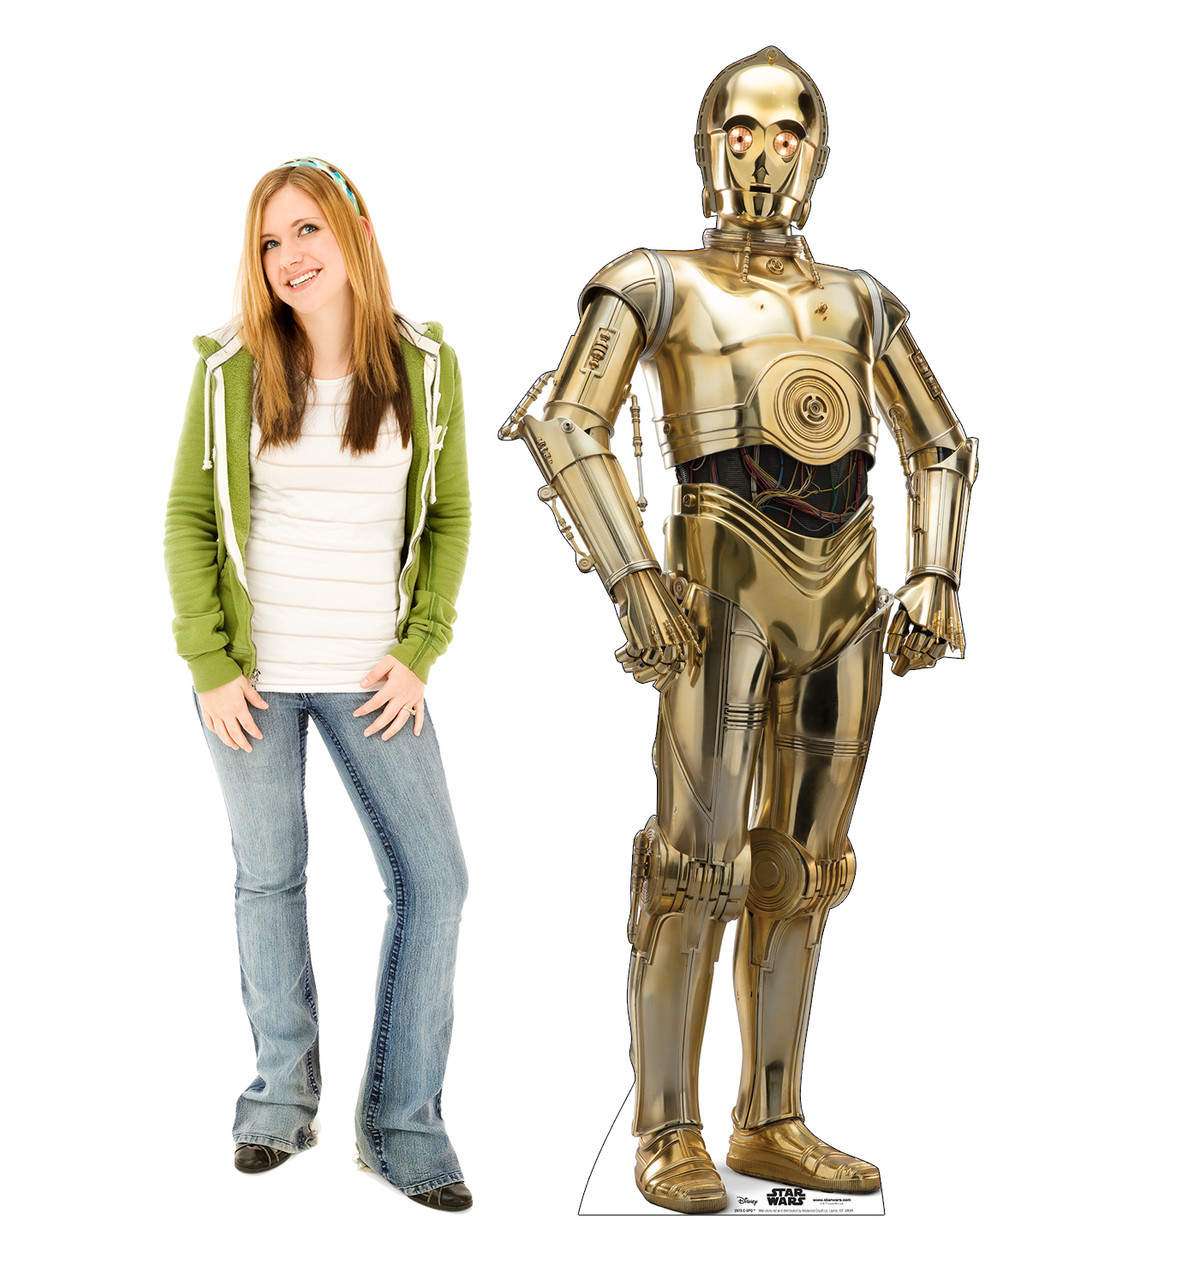 Life-size cardboard standee of C-3PO™ (Star Wars IX) with model.